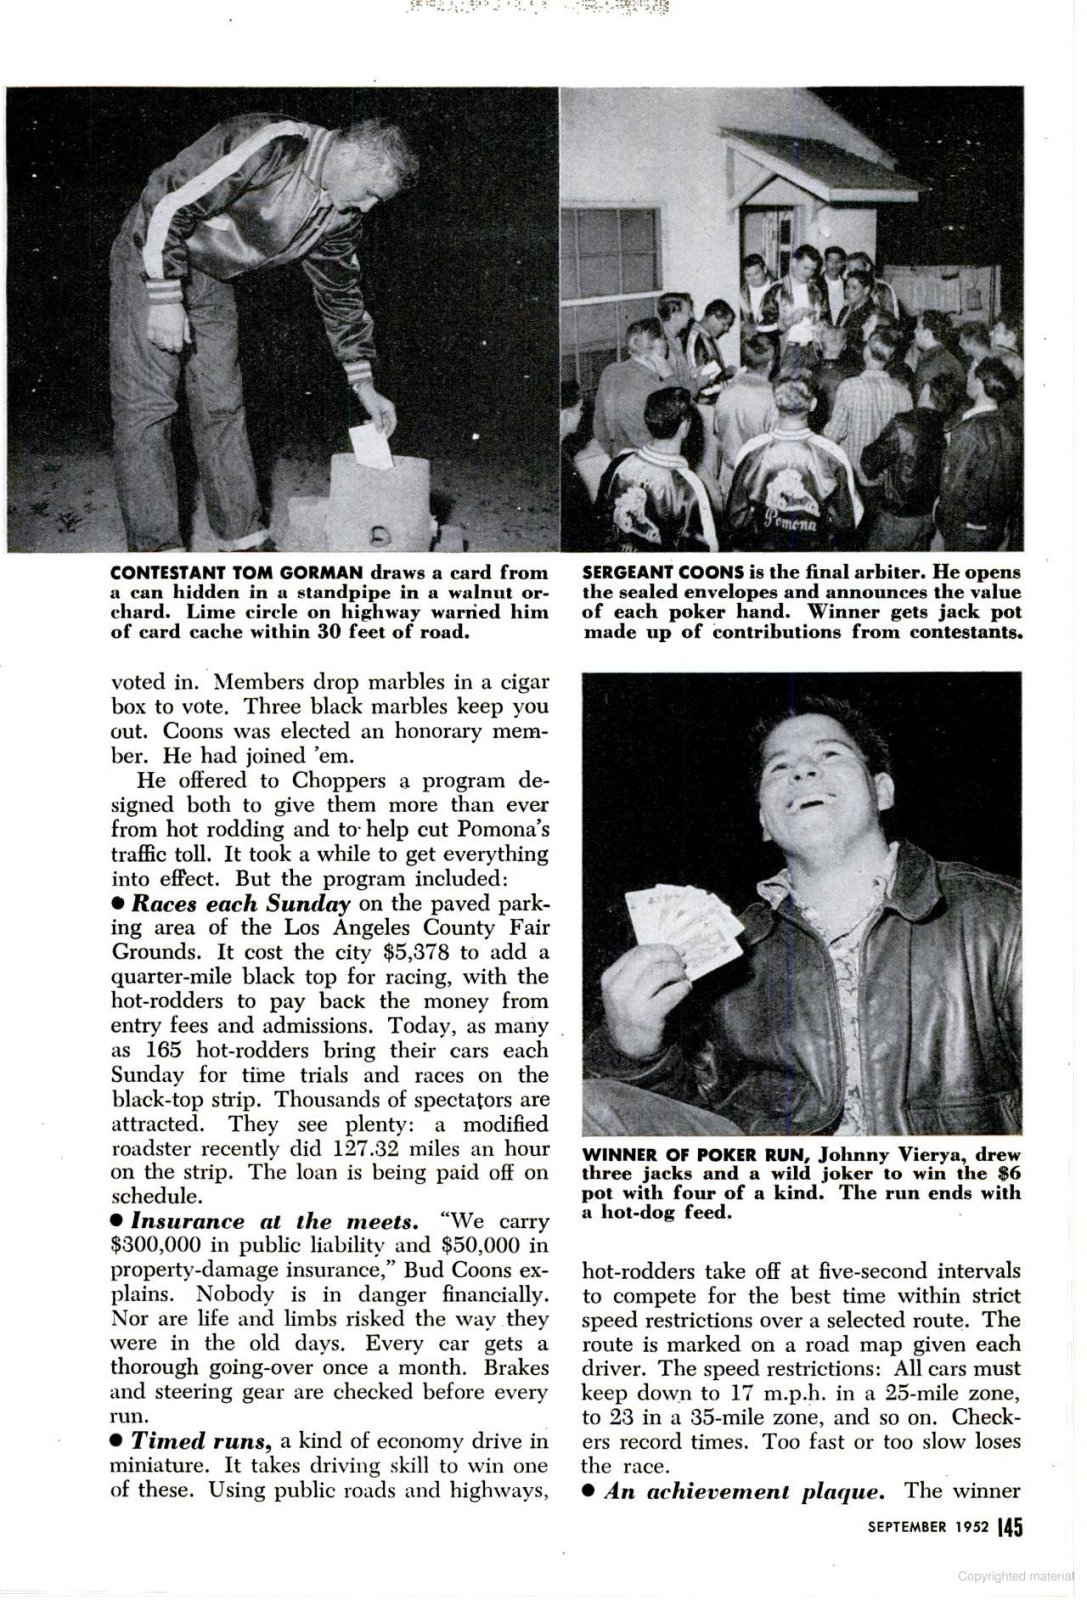 Popular Science - September 1952 - page 145.jpg